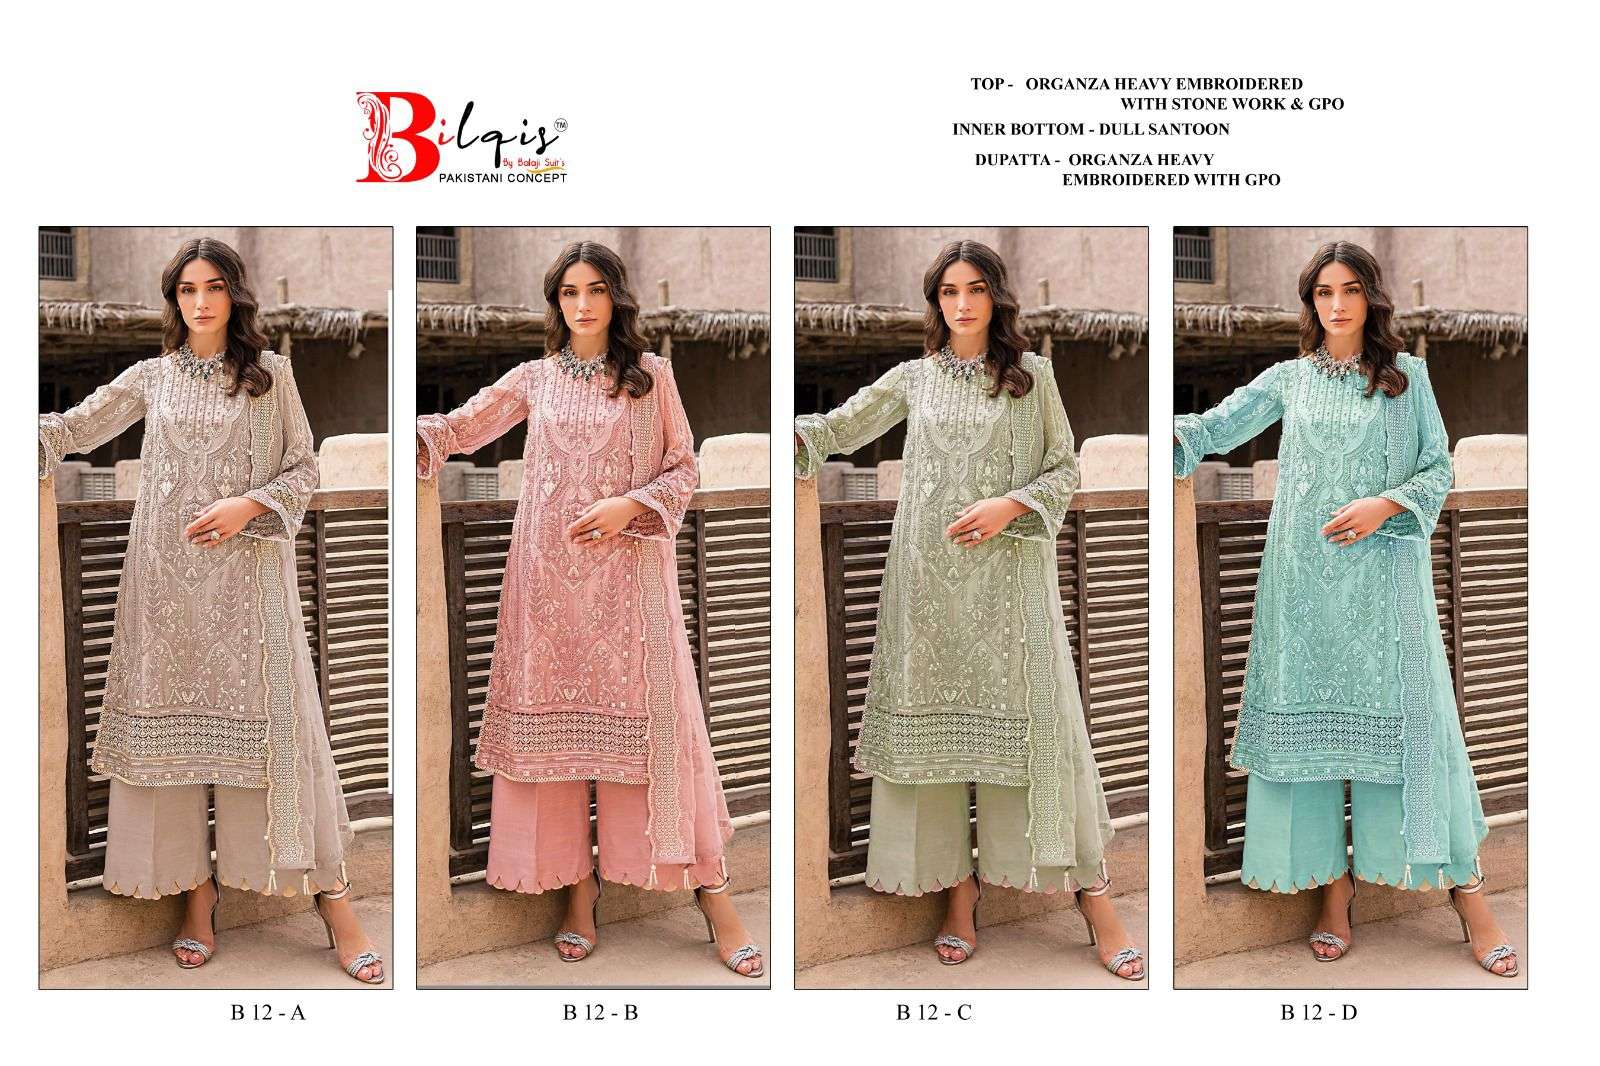 Bilqis B 12 Organza Embroidered Pakistani Suits Wholesale catalog